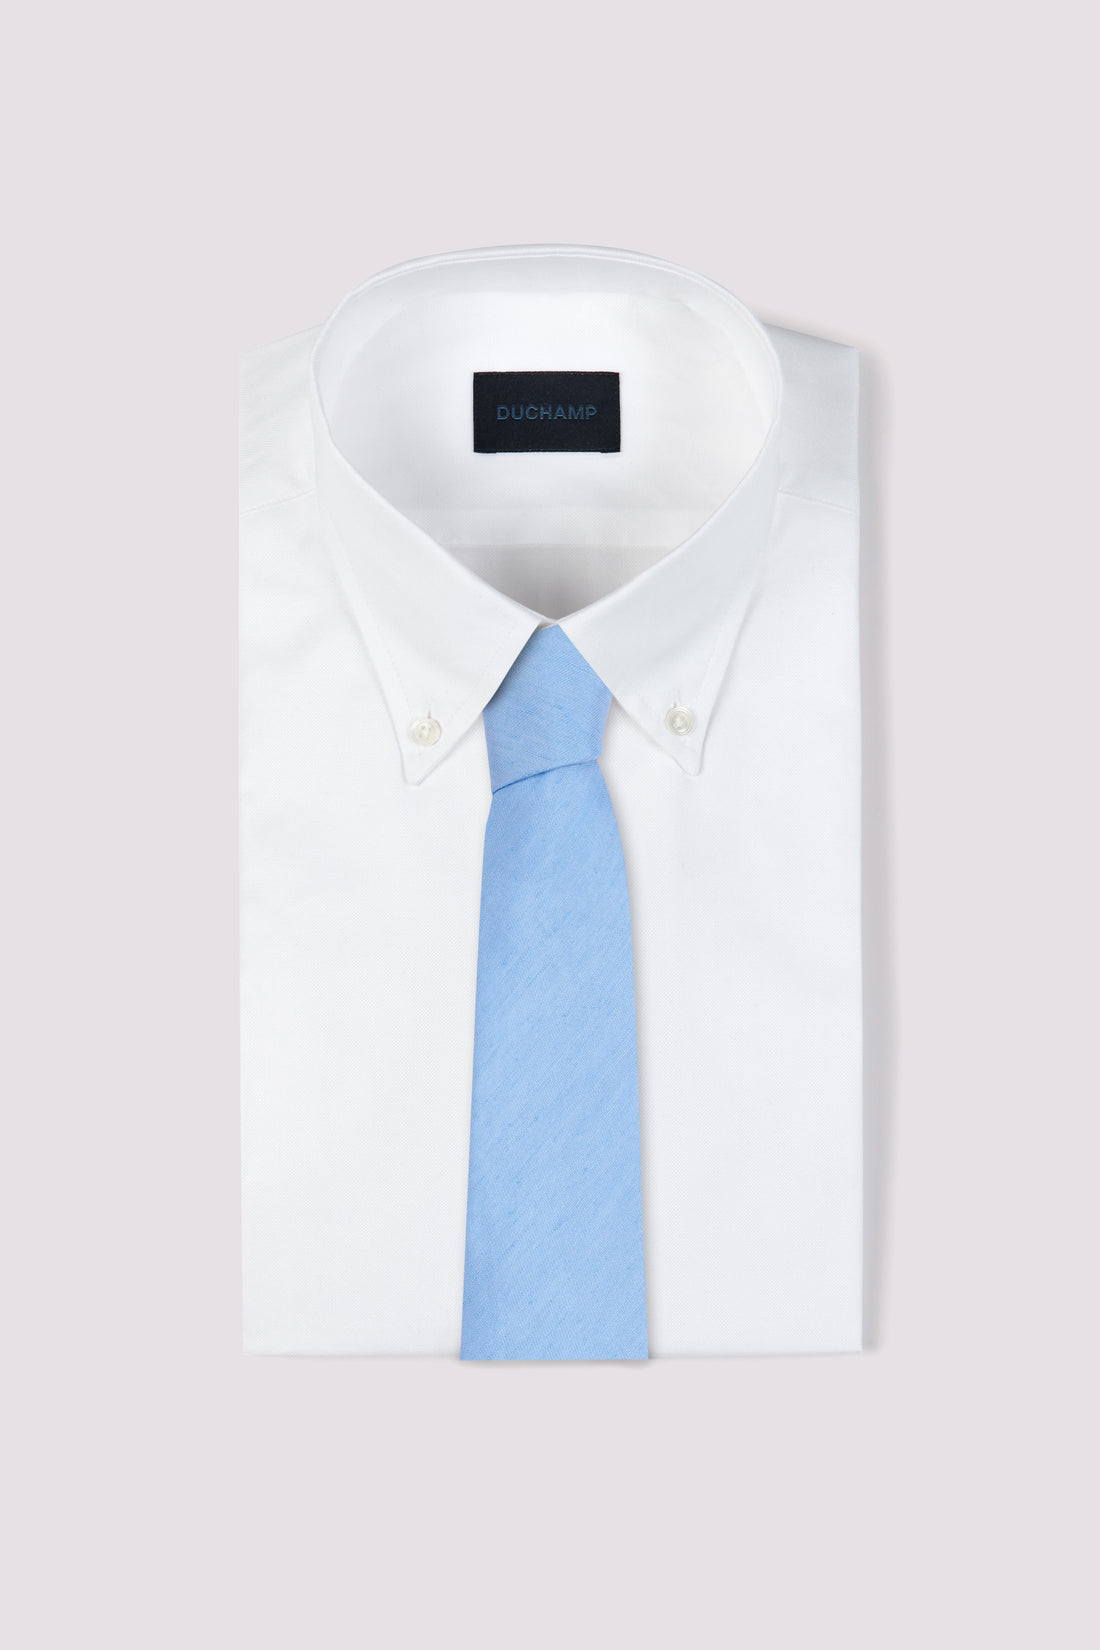 Silk/ Linen Tie Solid Tie Baby Blue